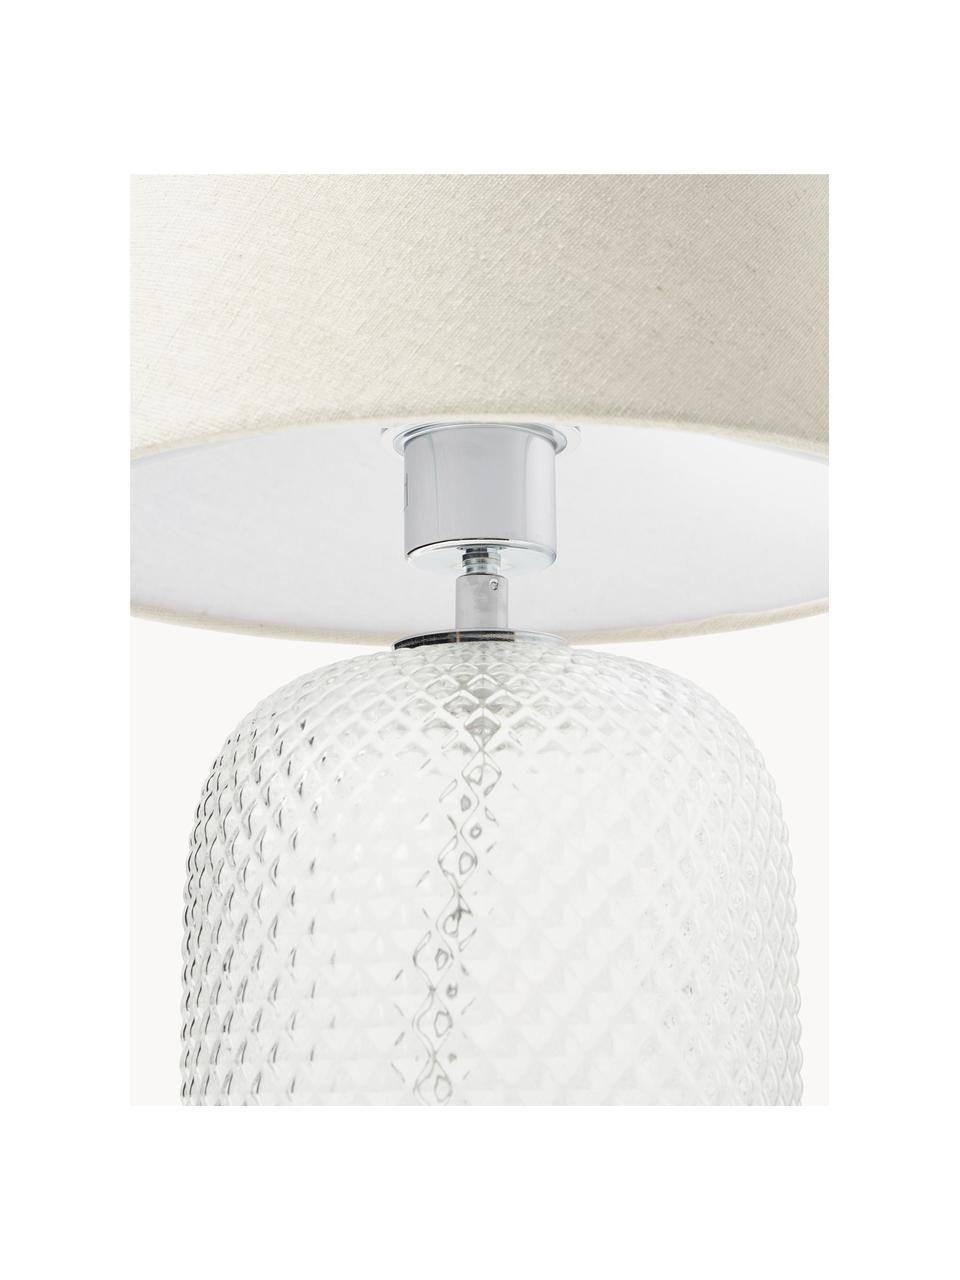 Petit lampe à poser Cornelia, Blanc, transparent, Ø 28 x haut. 38 cm